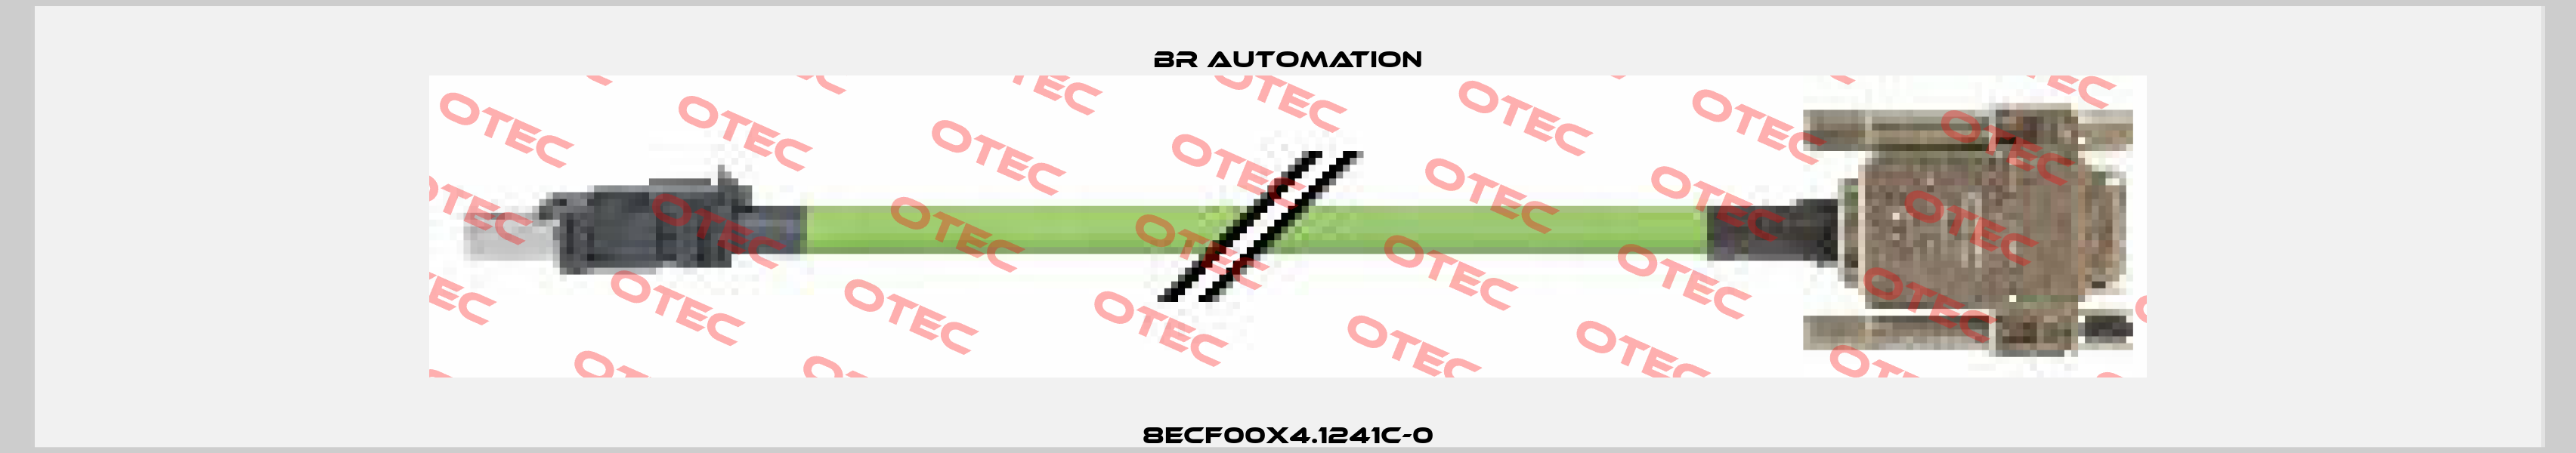 8ECF00X4.1241C-0 Br Automation